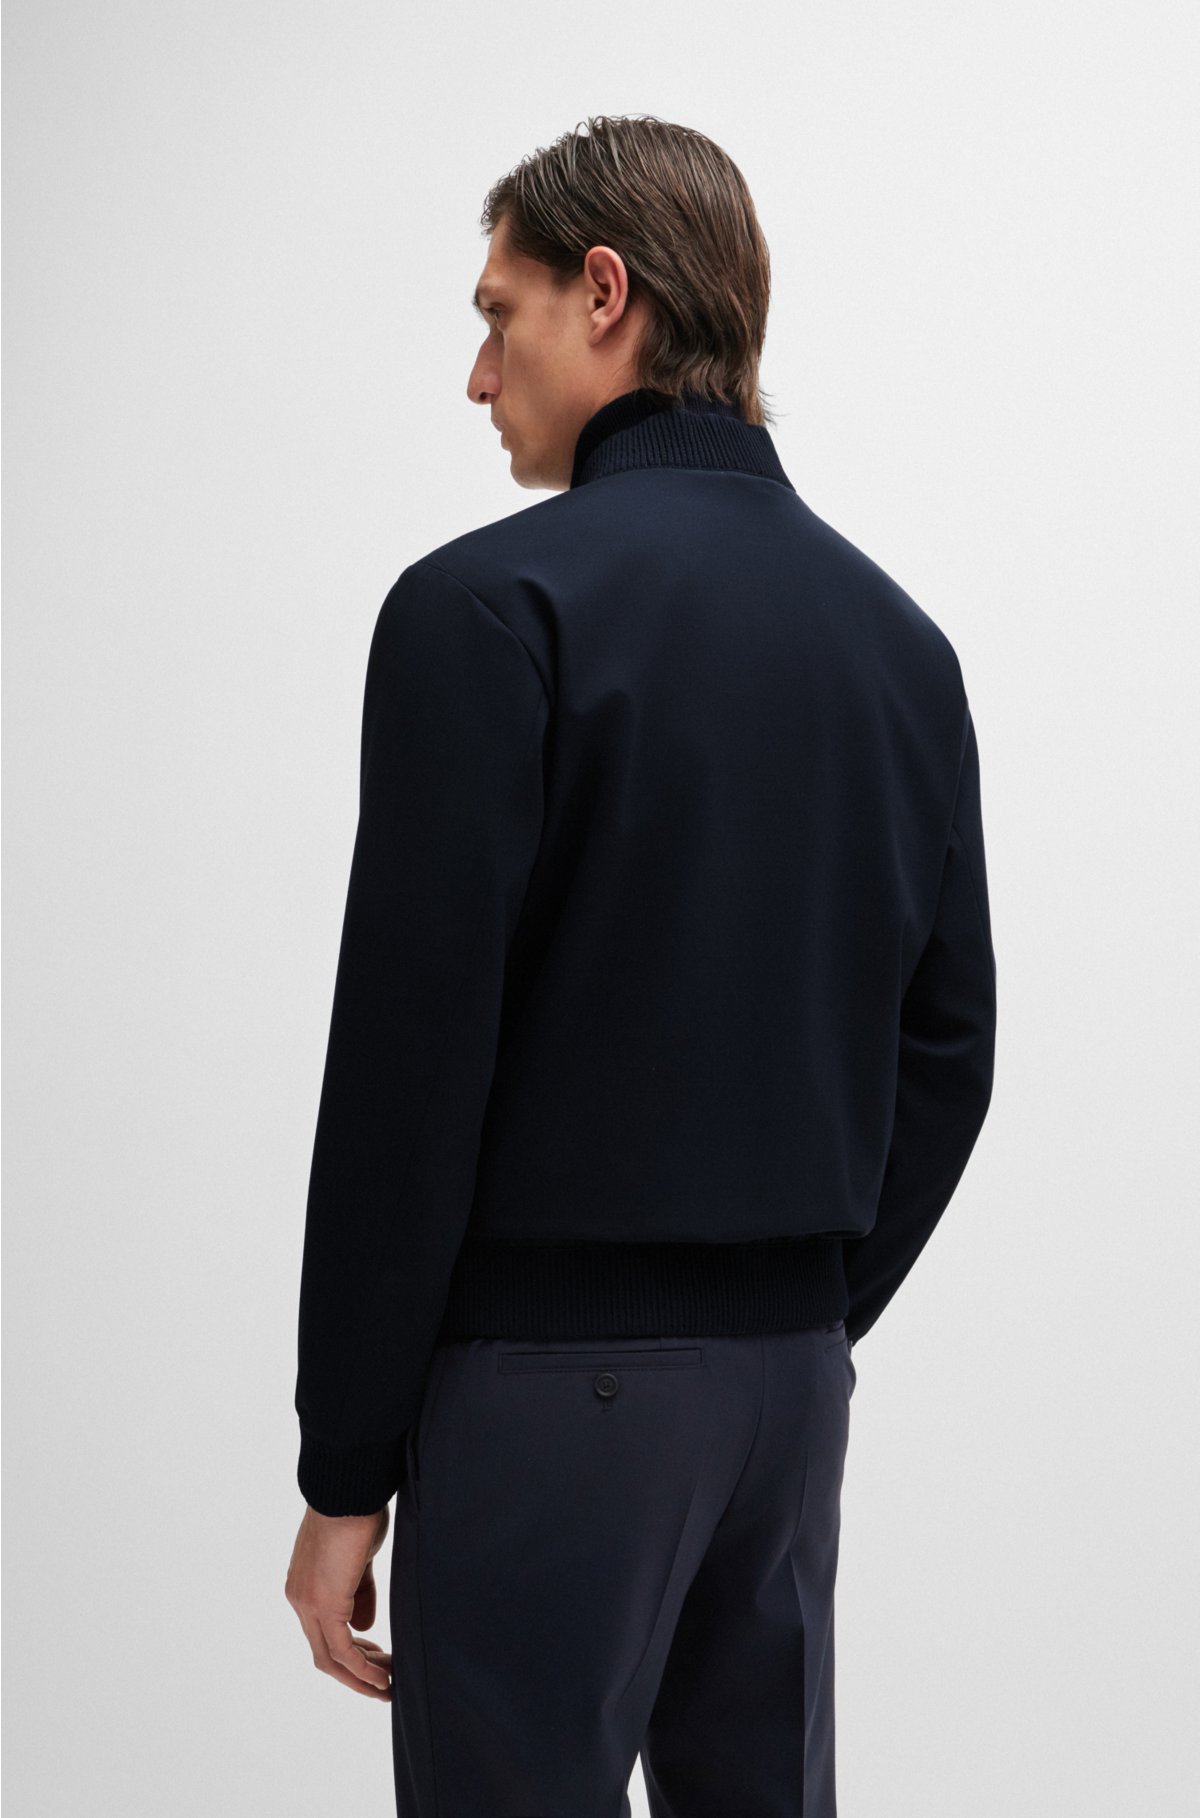 Slim-fit blouson jacket in a washable wool blend, Dark Blue